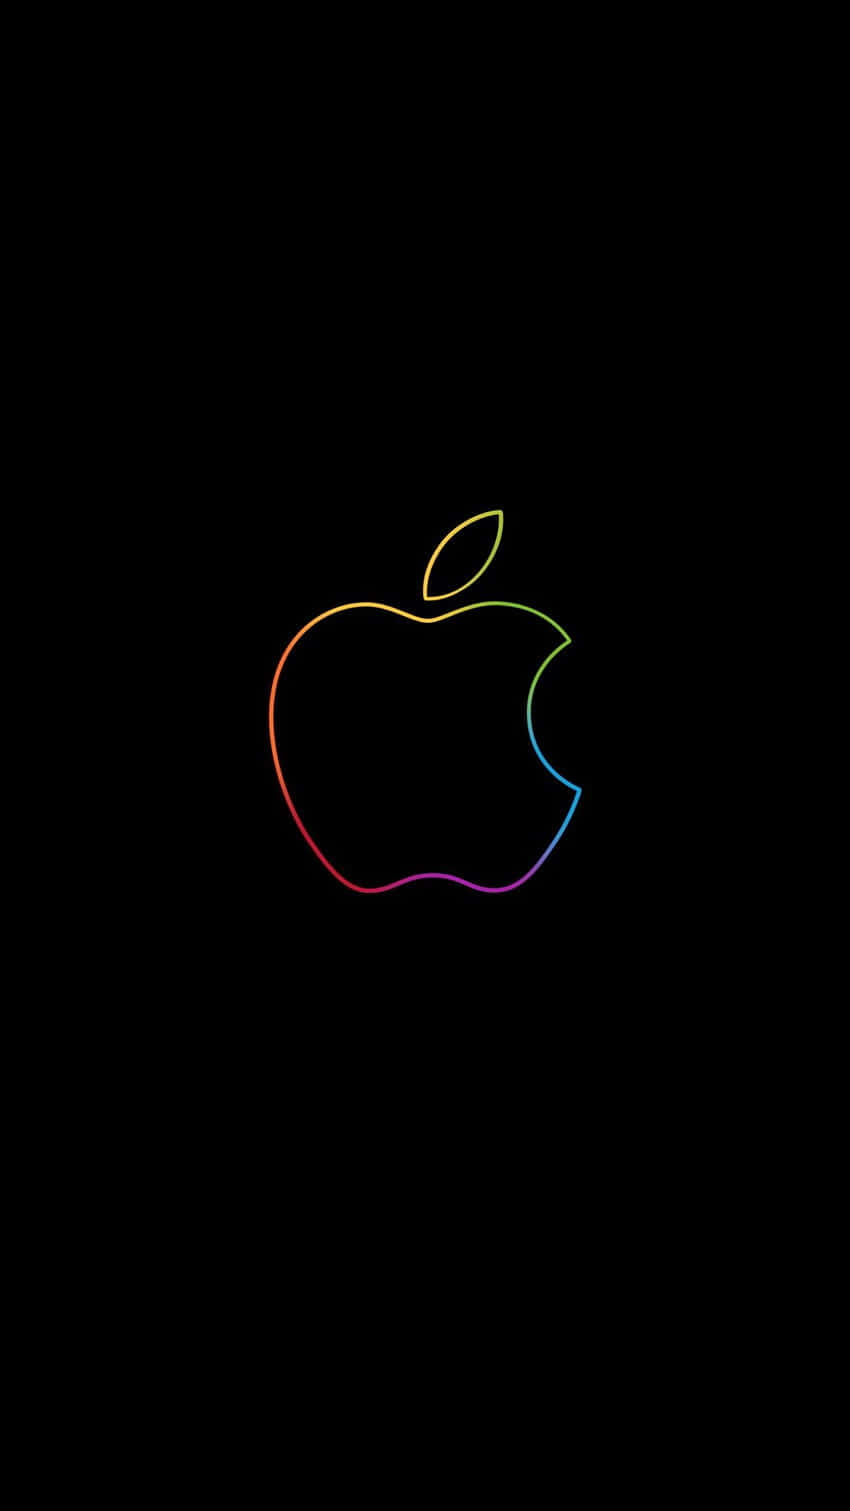 Retro Apple-logo 850 X 1511 Wallpaper